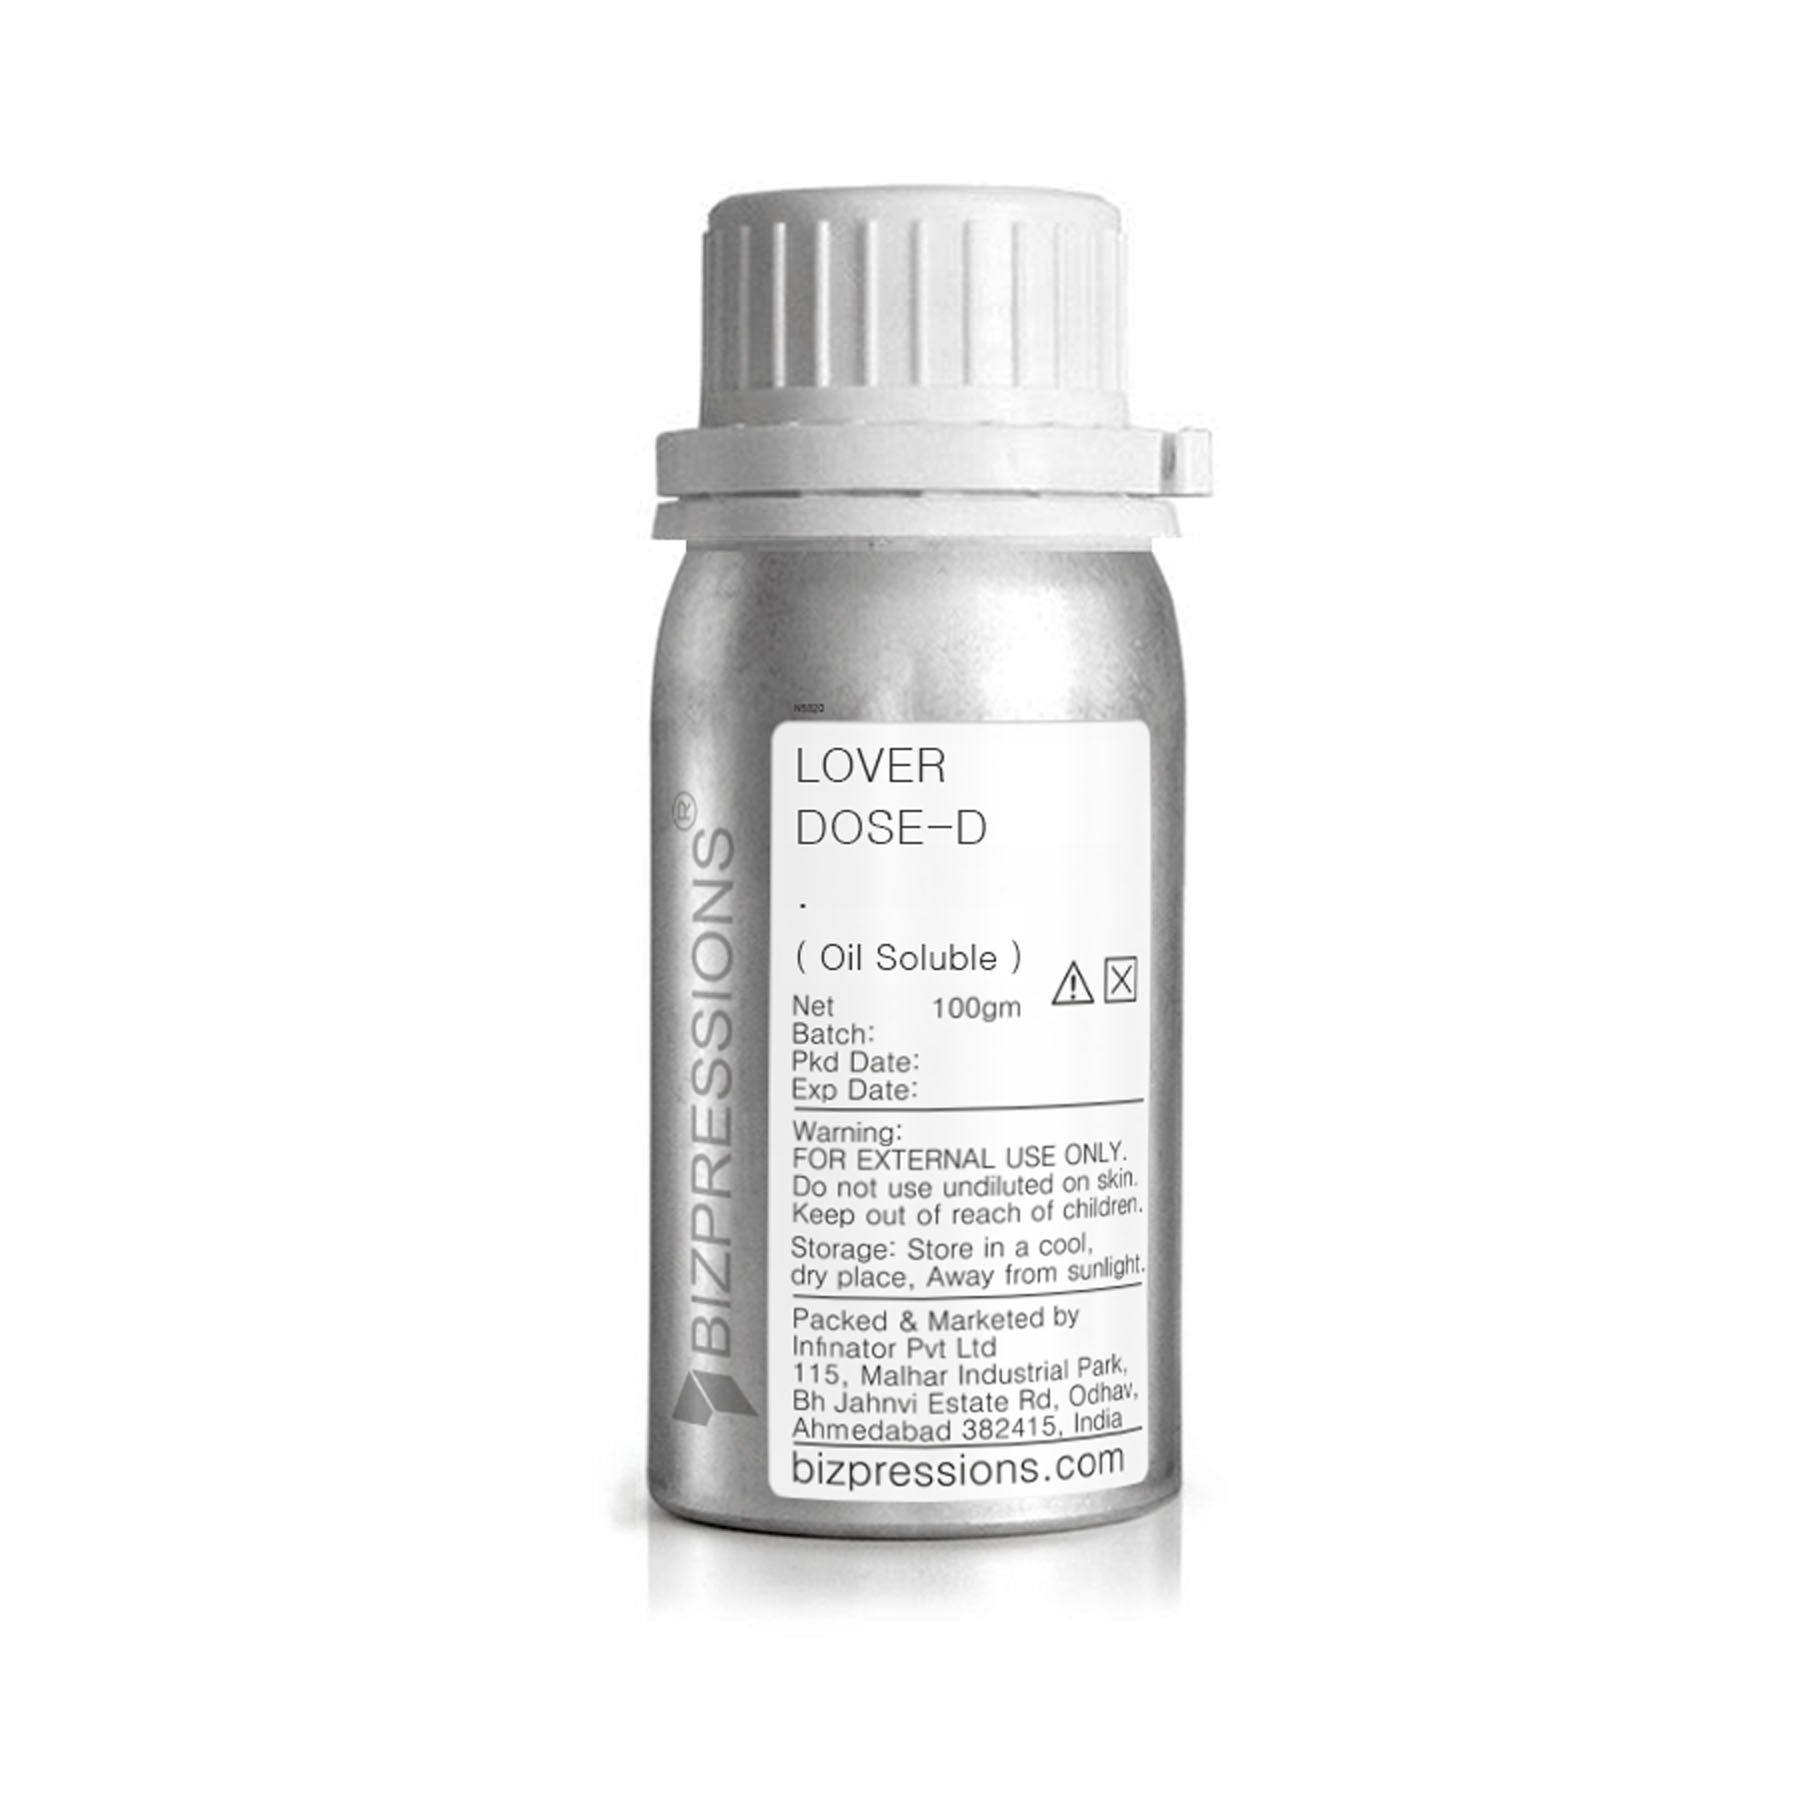 LOVER DOSE- D - Fragrance ( Oil Soluble ) - 100 gm